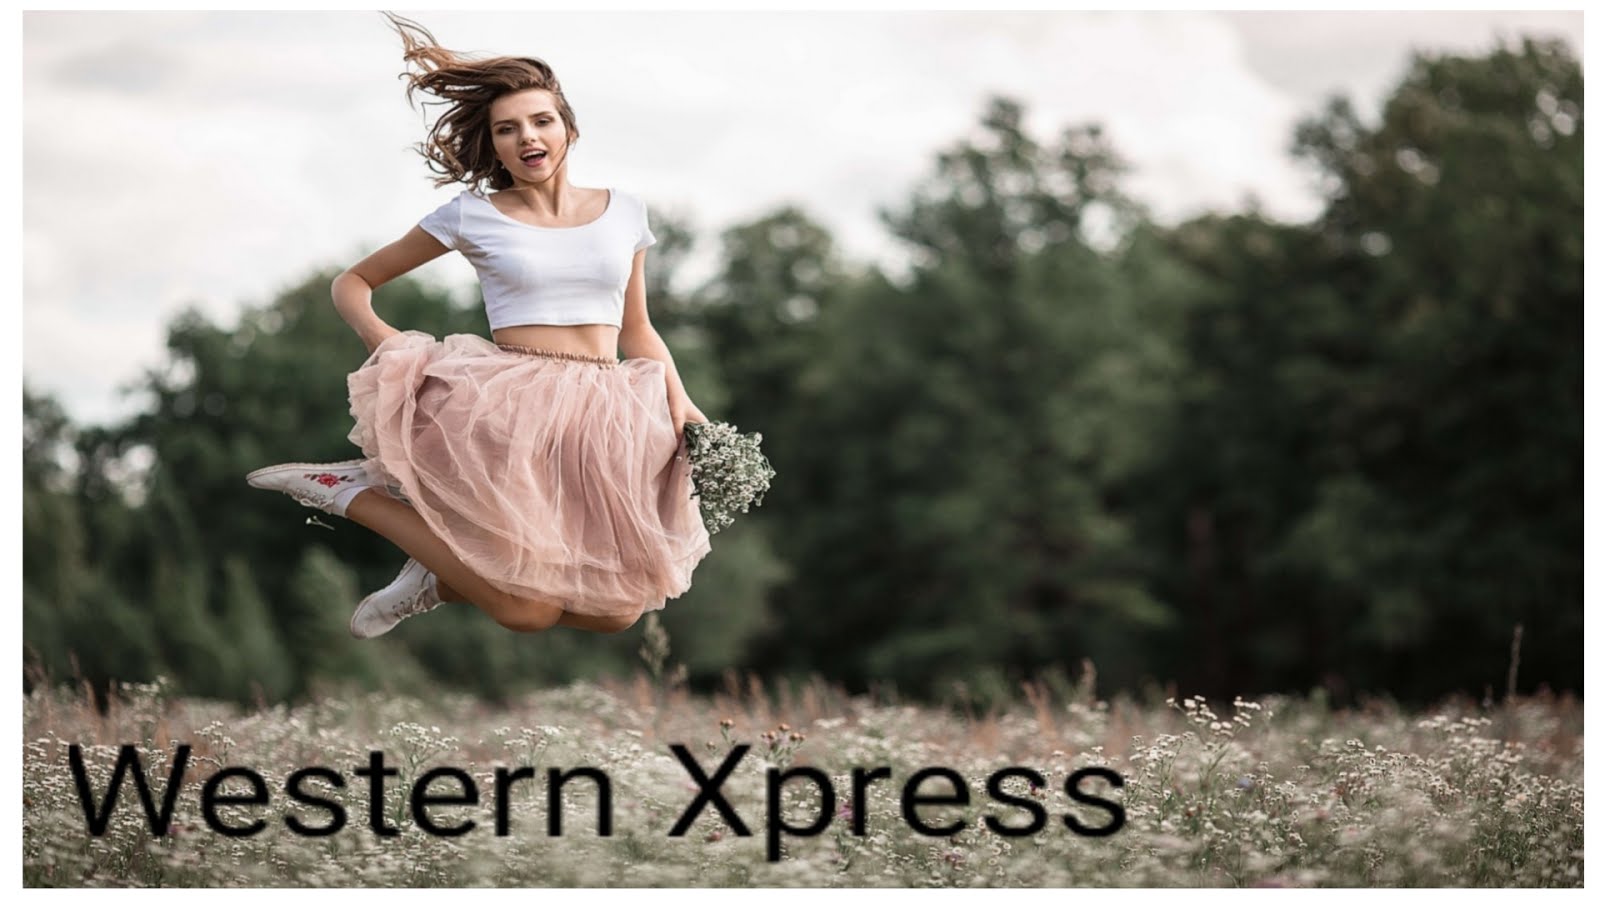 Western Xpress